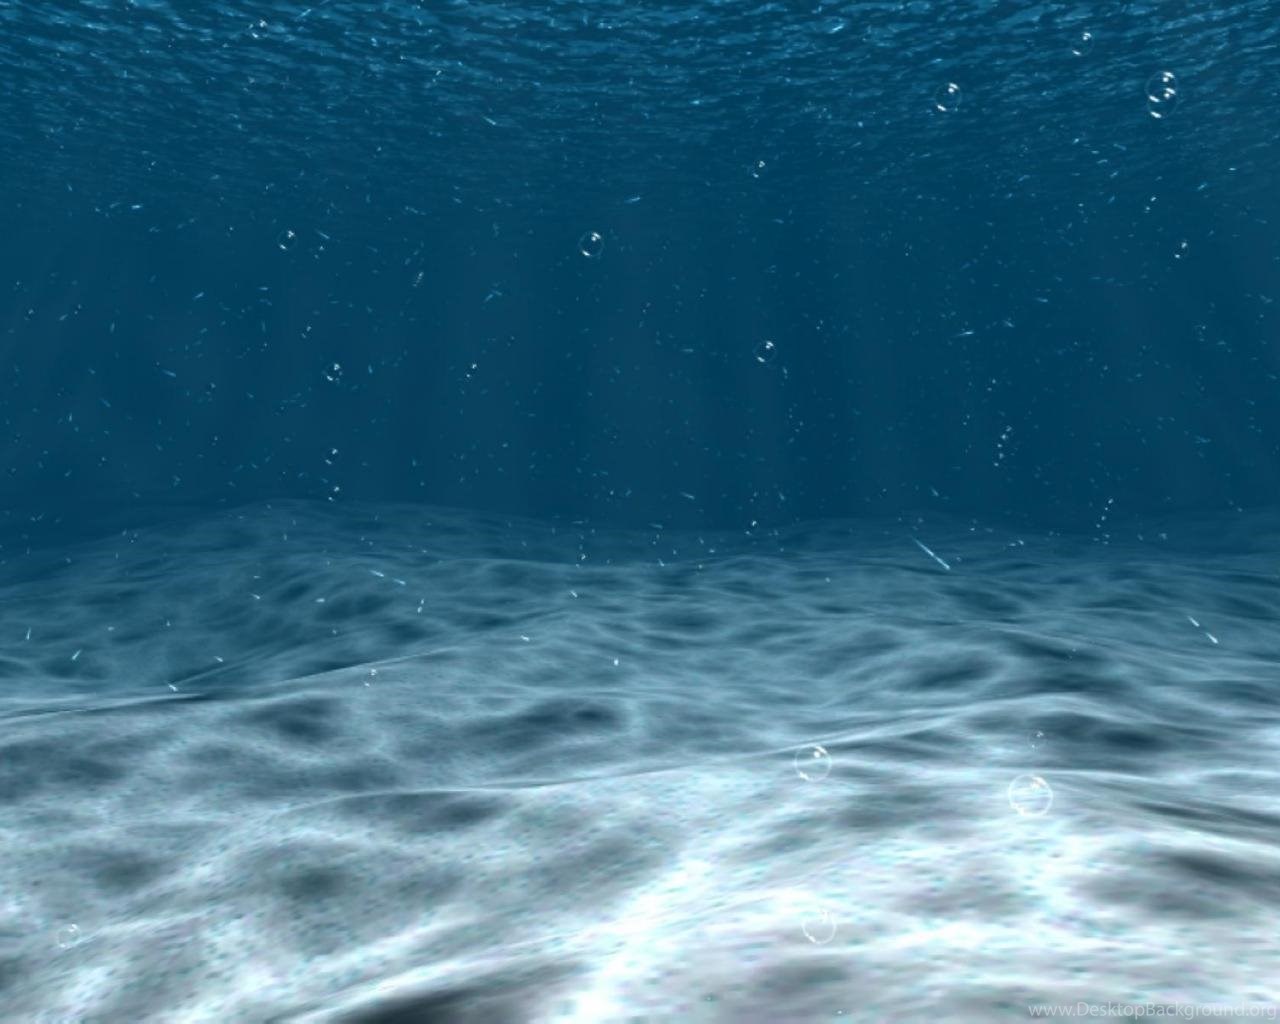 Толща воды океана. Дно океана. Море под водой. Море глубина. Темное дно океана.